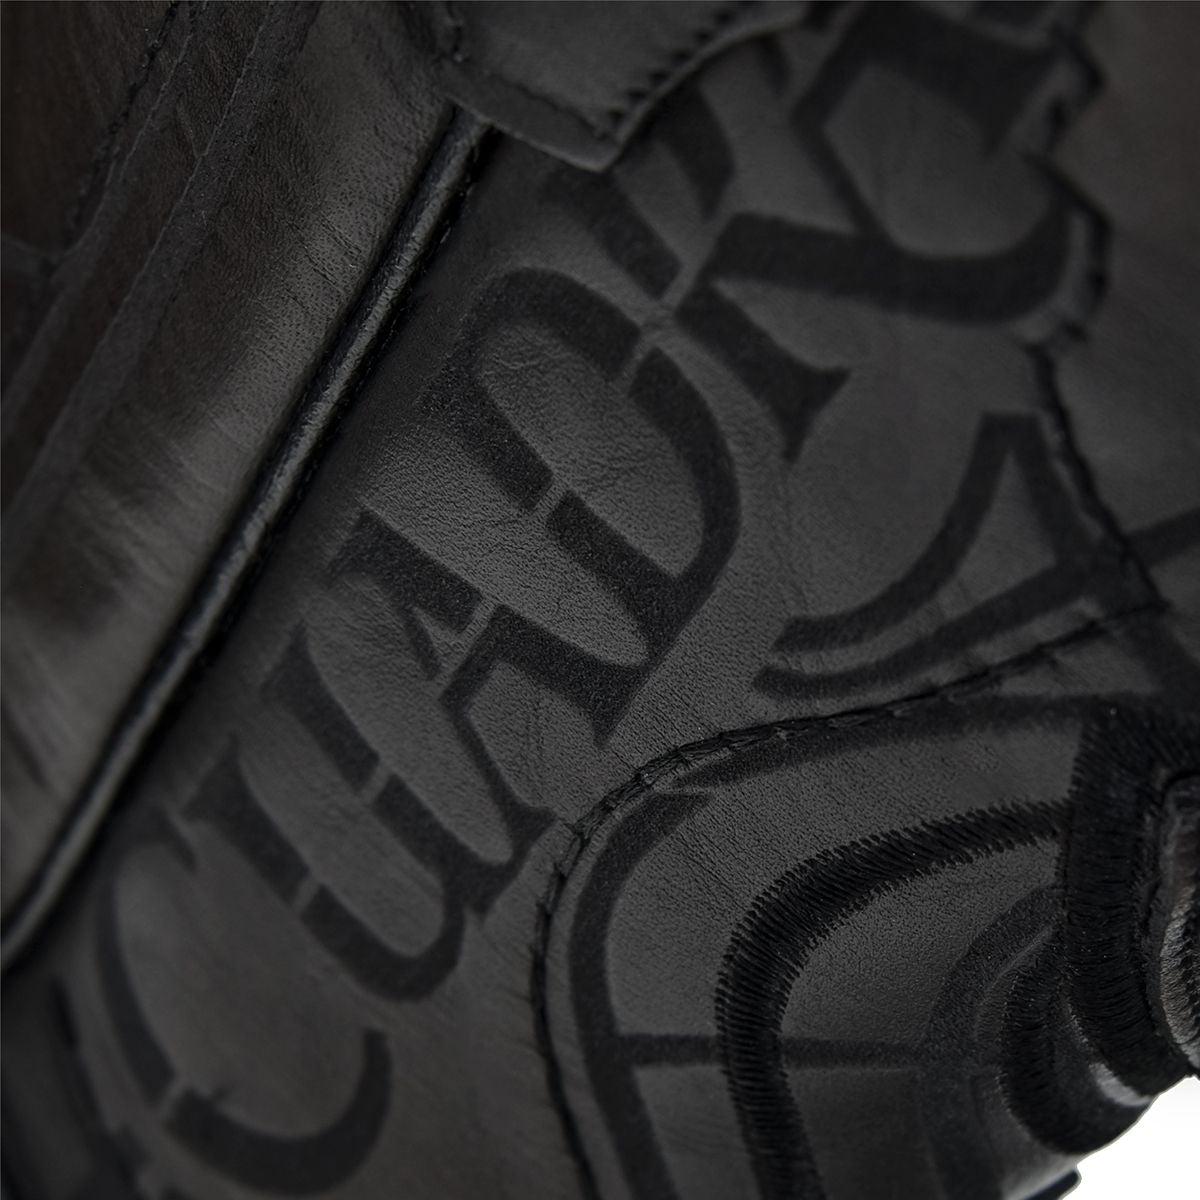 1J1NRS - Cuadra black casual fashion cowhide cowboy leather boots for men-Kuet.us